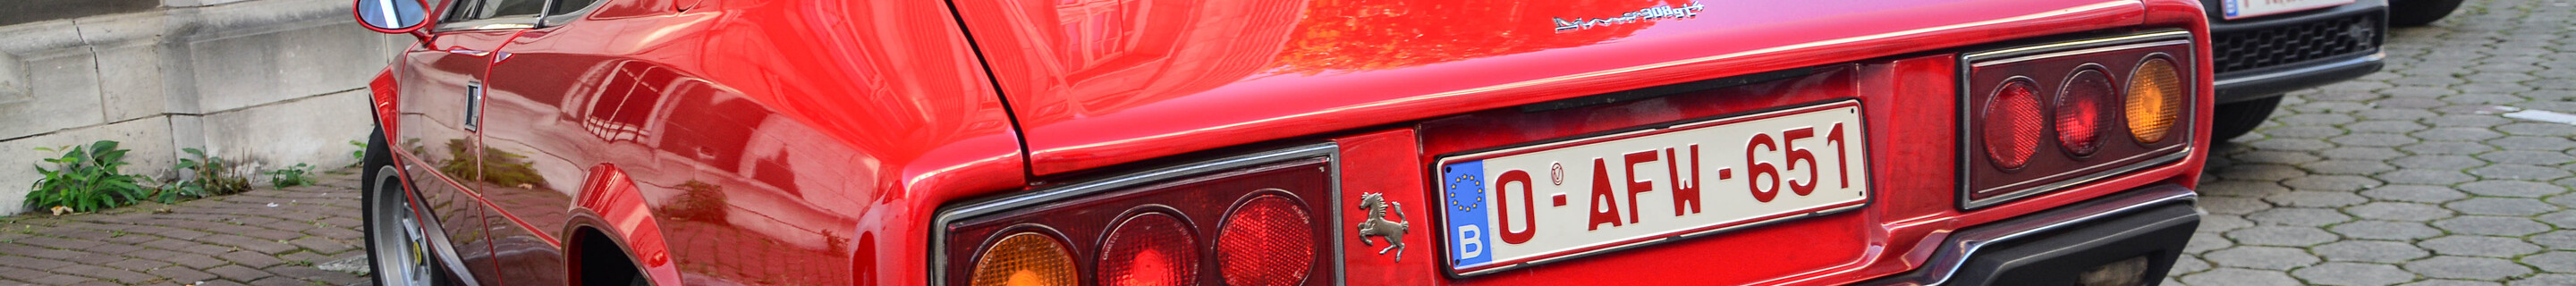 Ferrari Dino 308 GT4